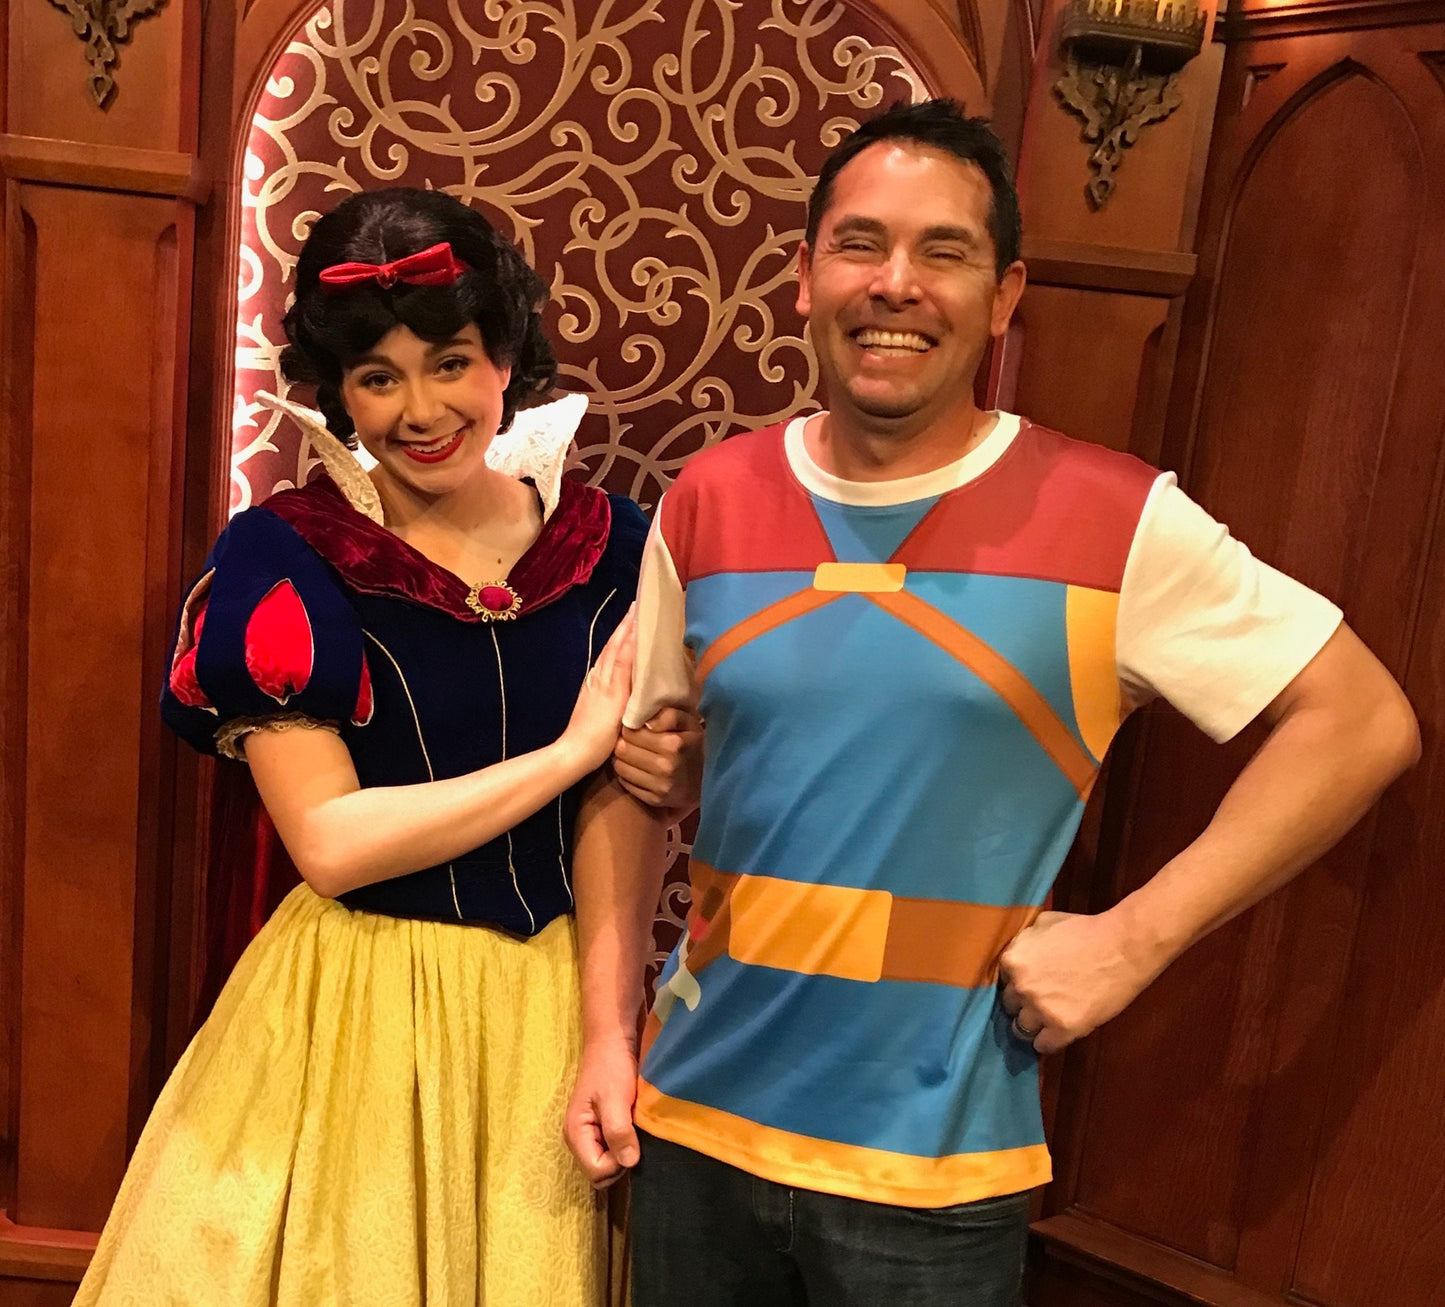 RUSH ORDER: Men's Snow White Prince Snow White and the Seven Dwarfs Inspired Shirt